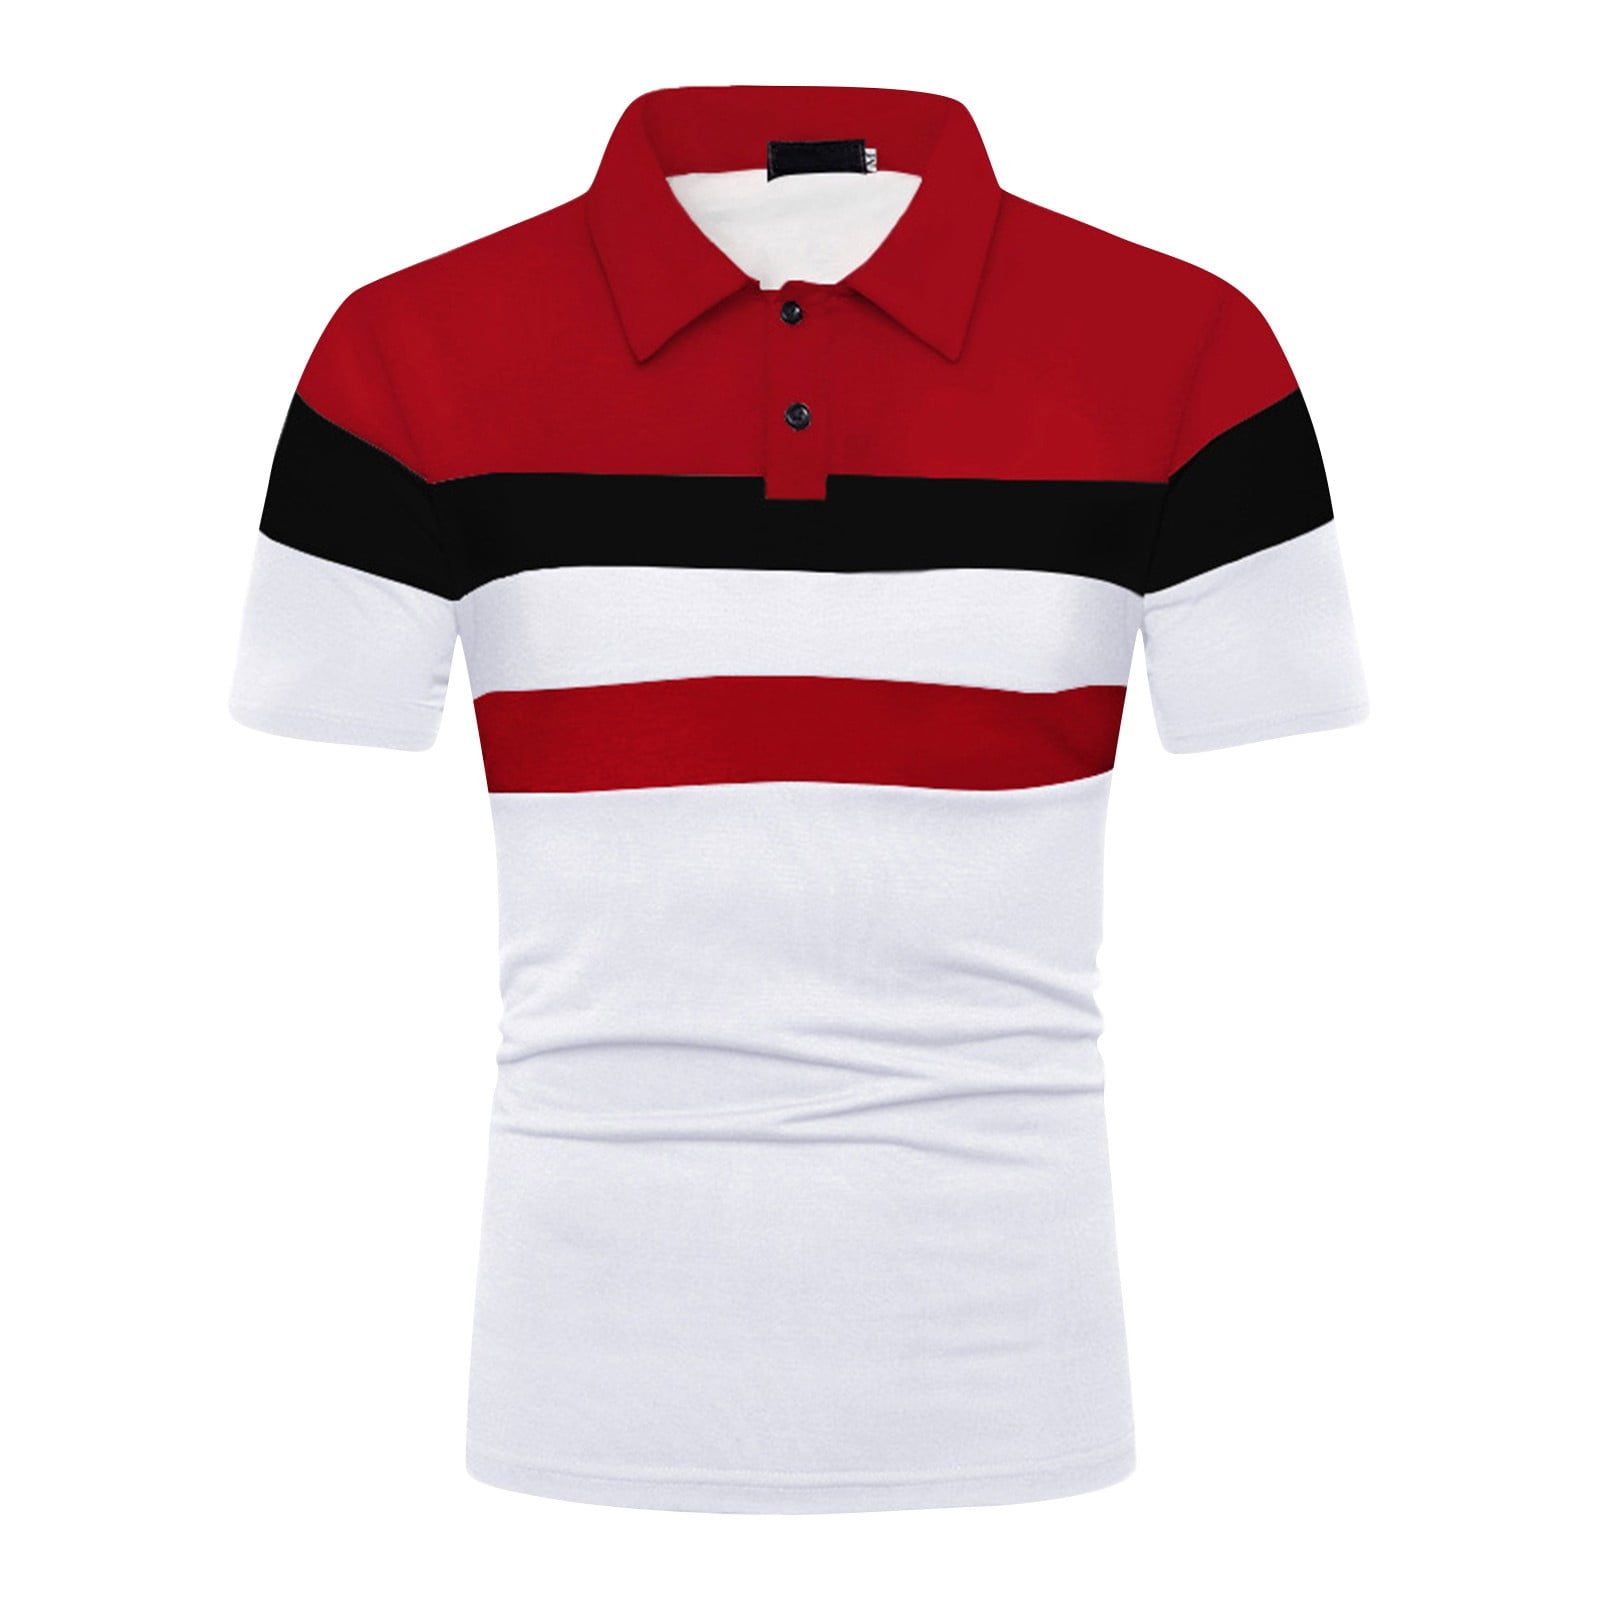 Fragarn Men's Dry Fit Golf Polo Shirt - Walmart.com